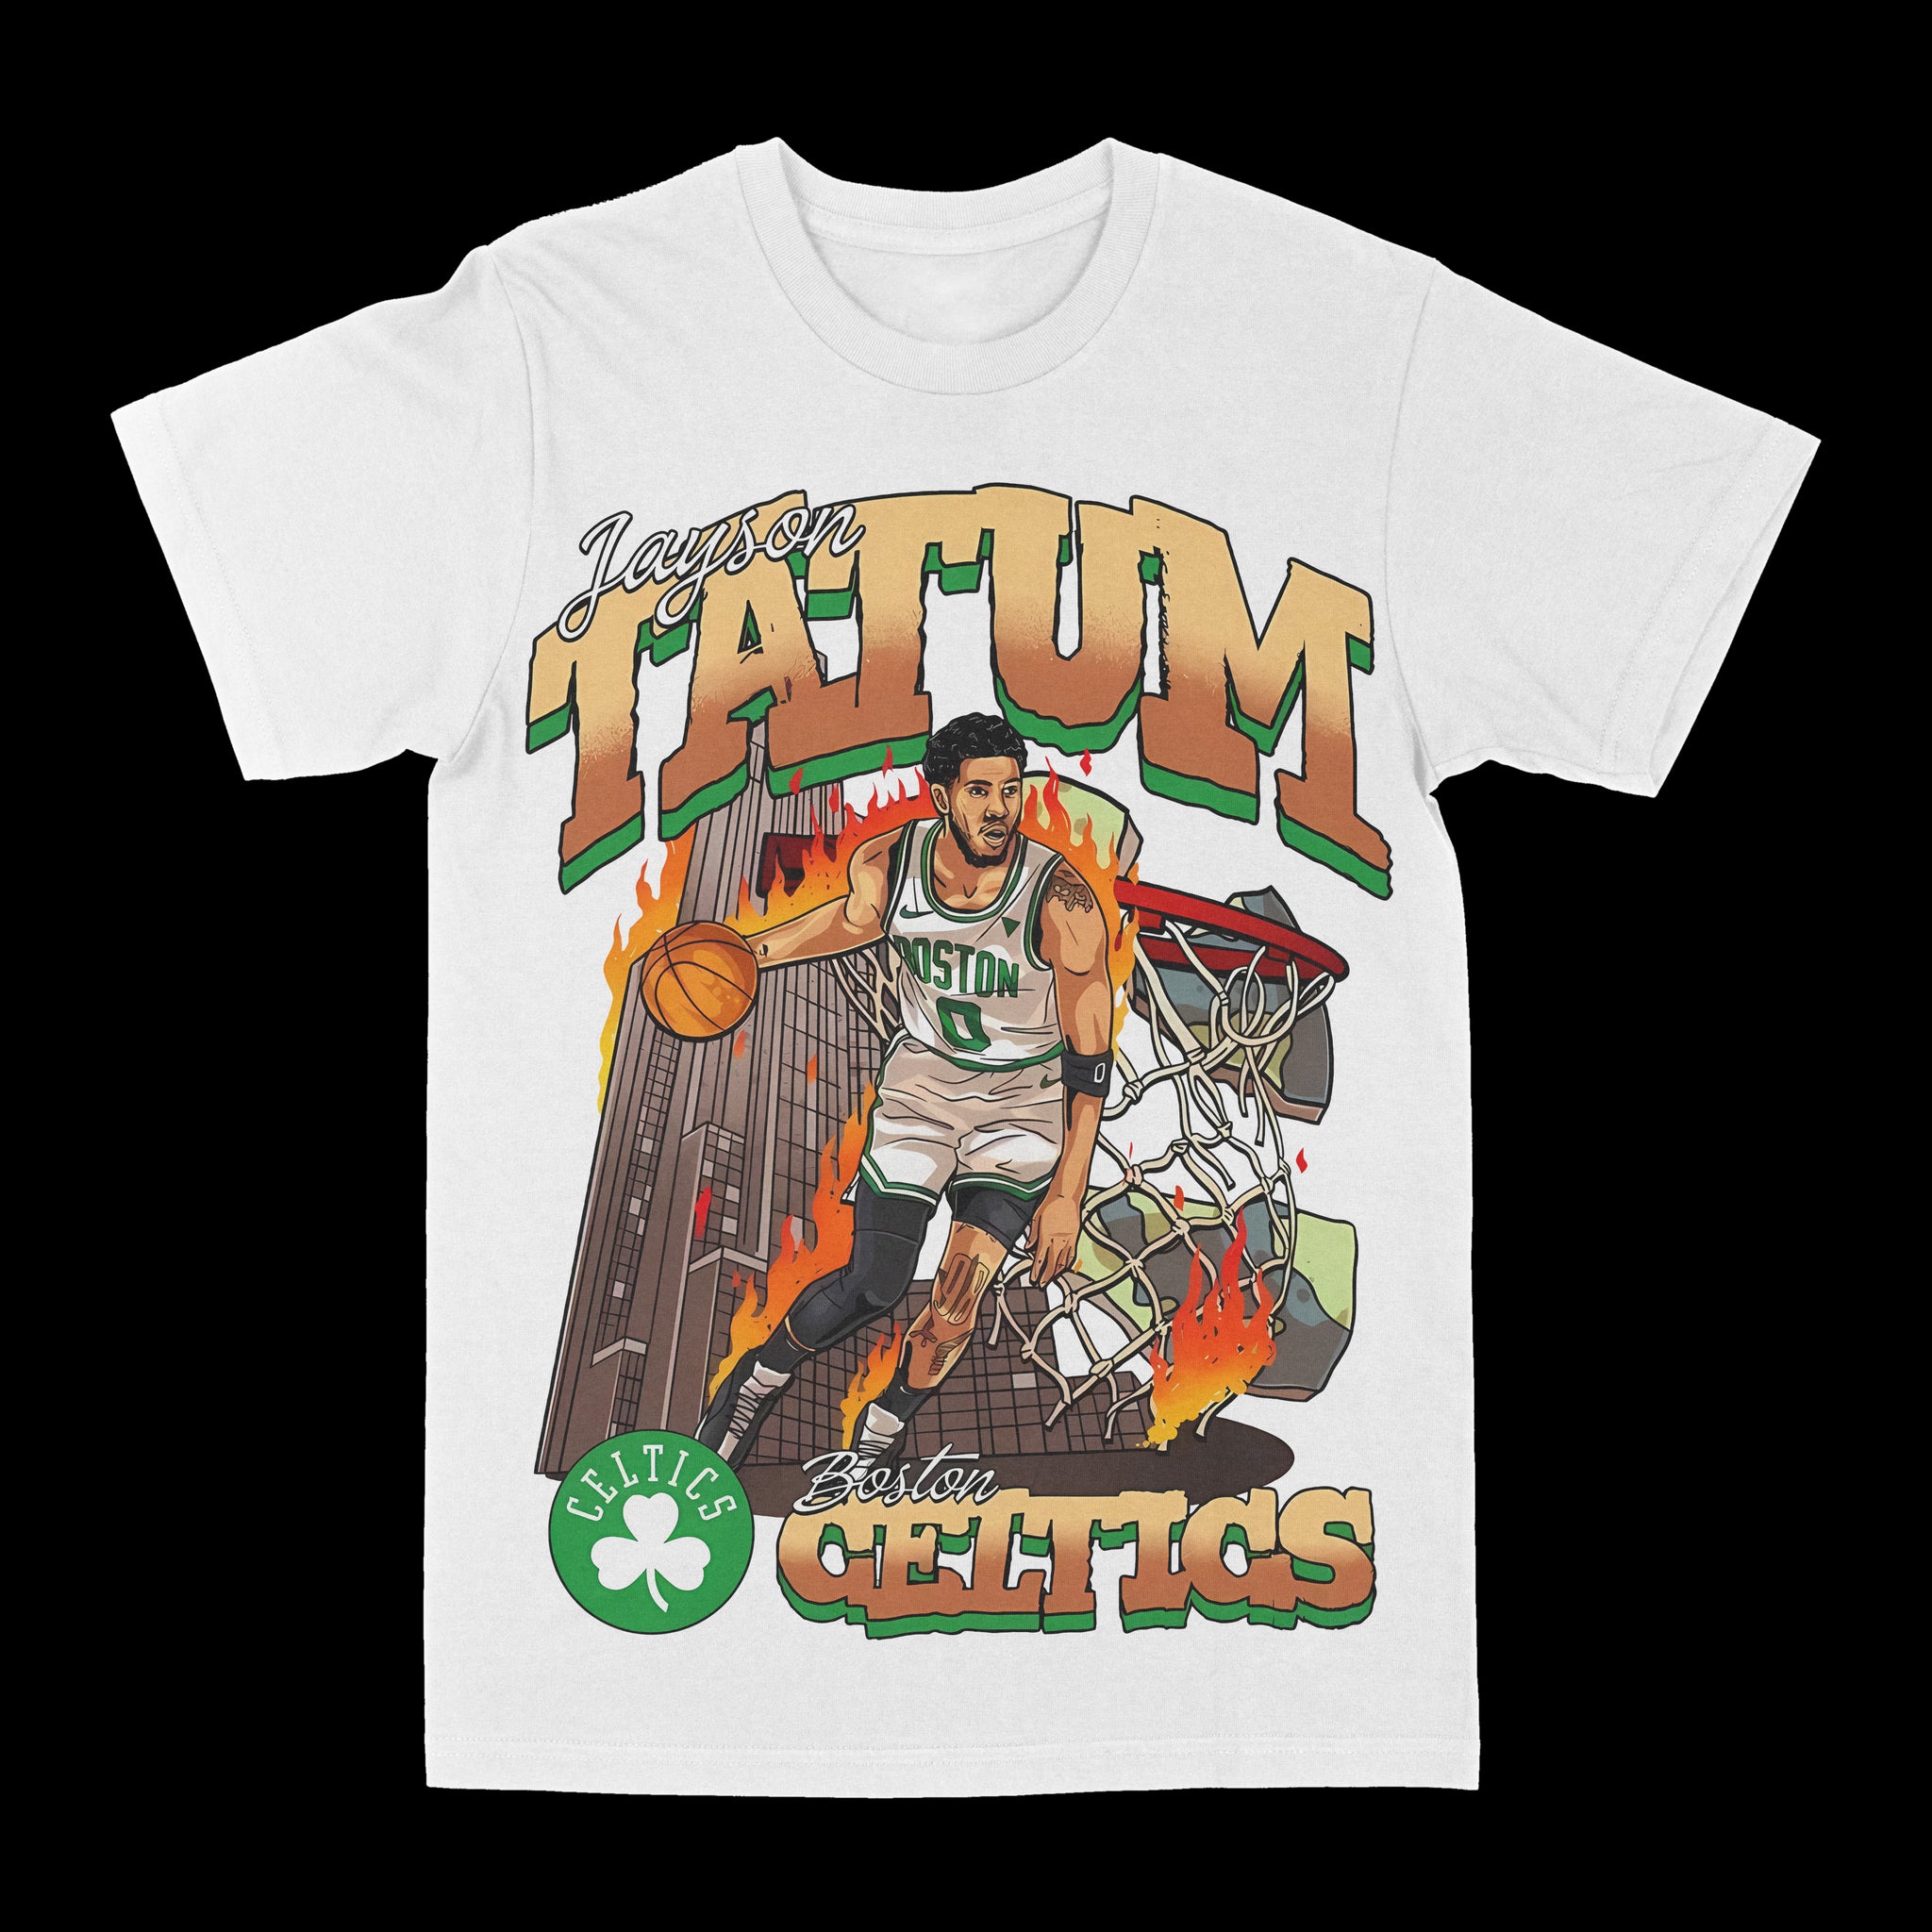 Jayson Tatum "Getting Buckets" Graphic Tee